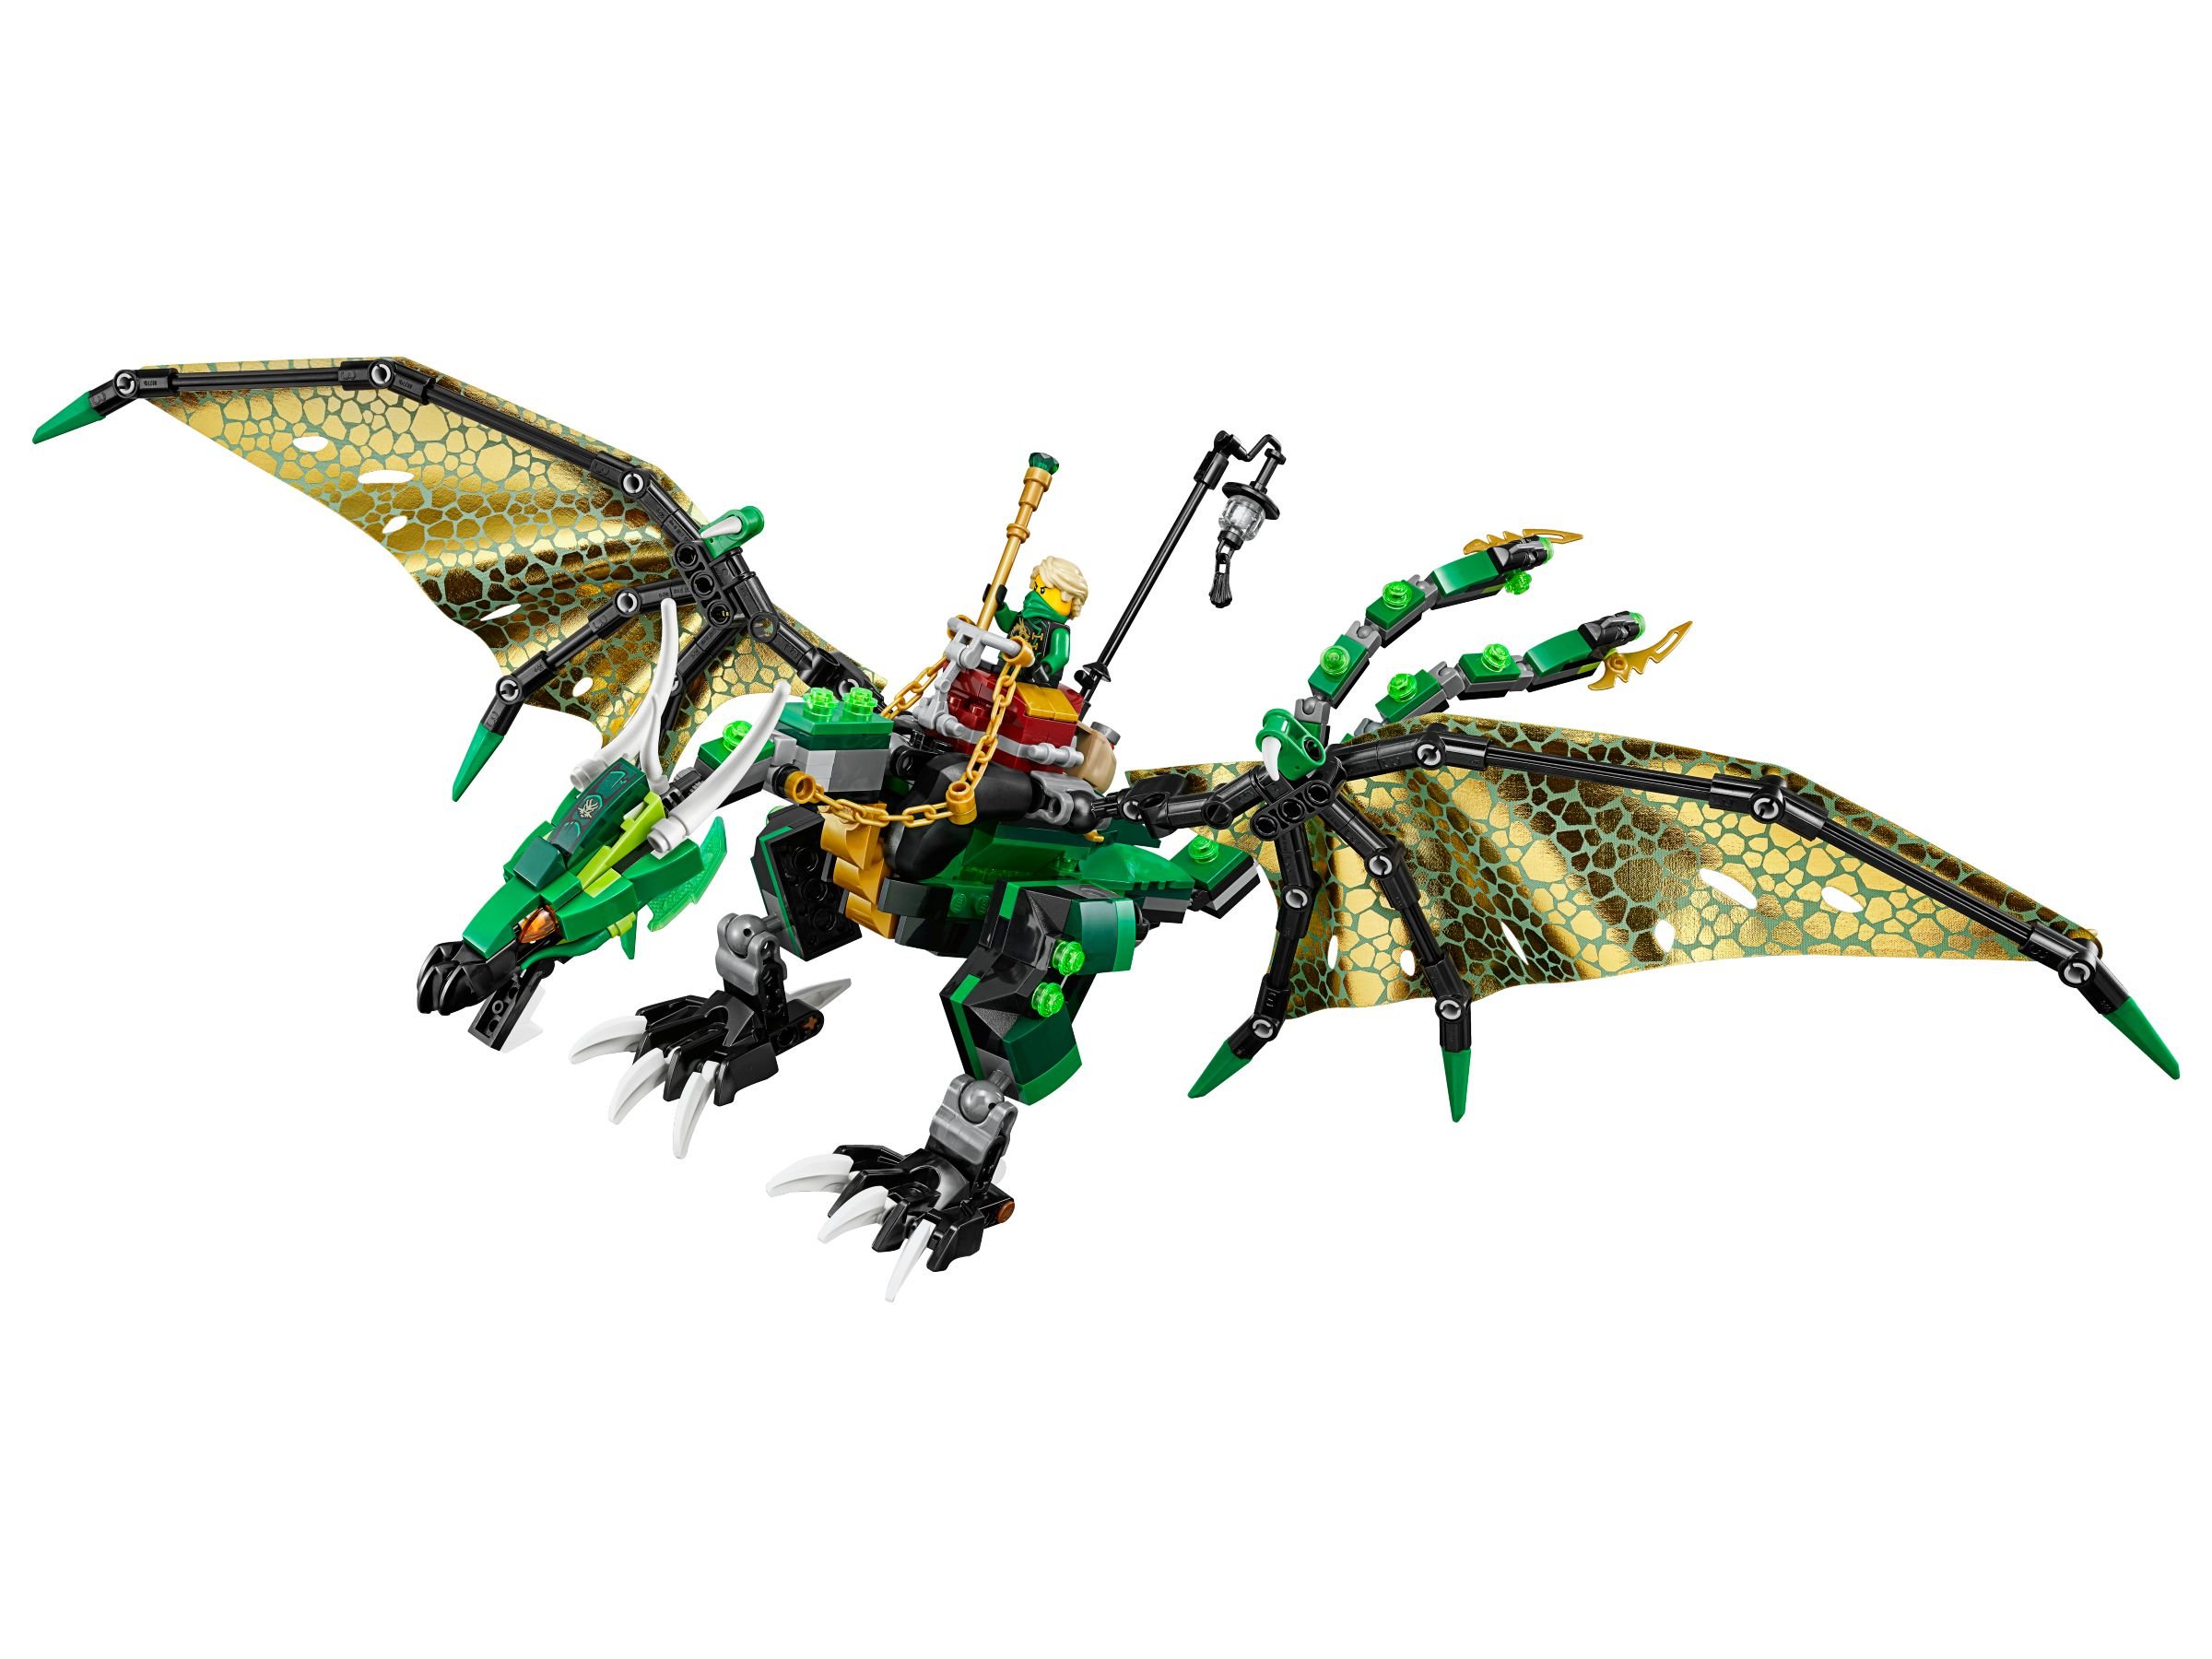 LEGO Ninjago 70593 Der Grüne Energie-Drache LEGO_70593_alt2.jpg